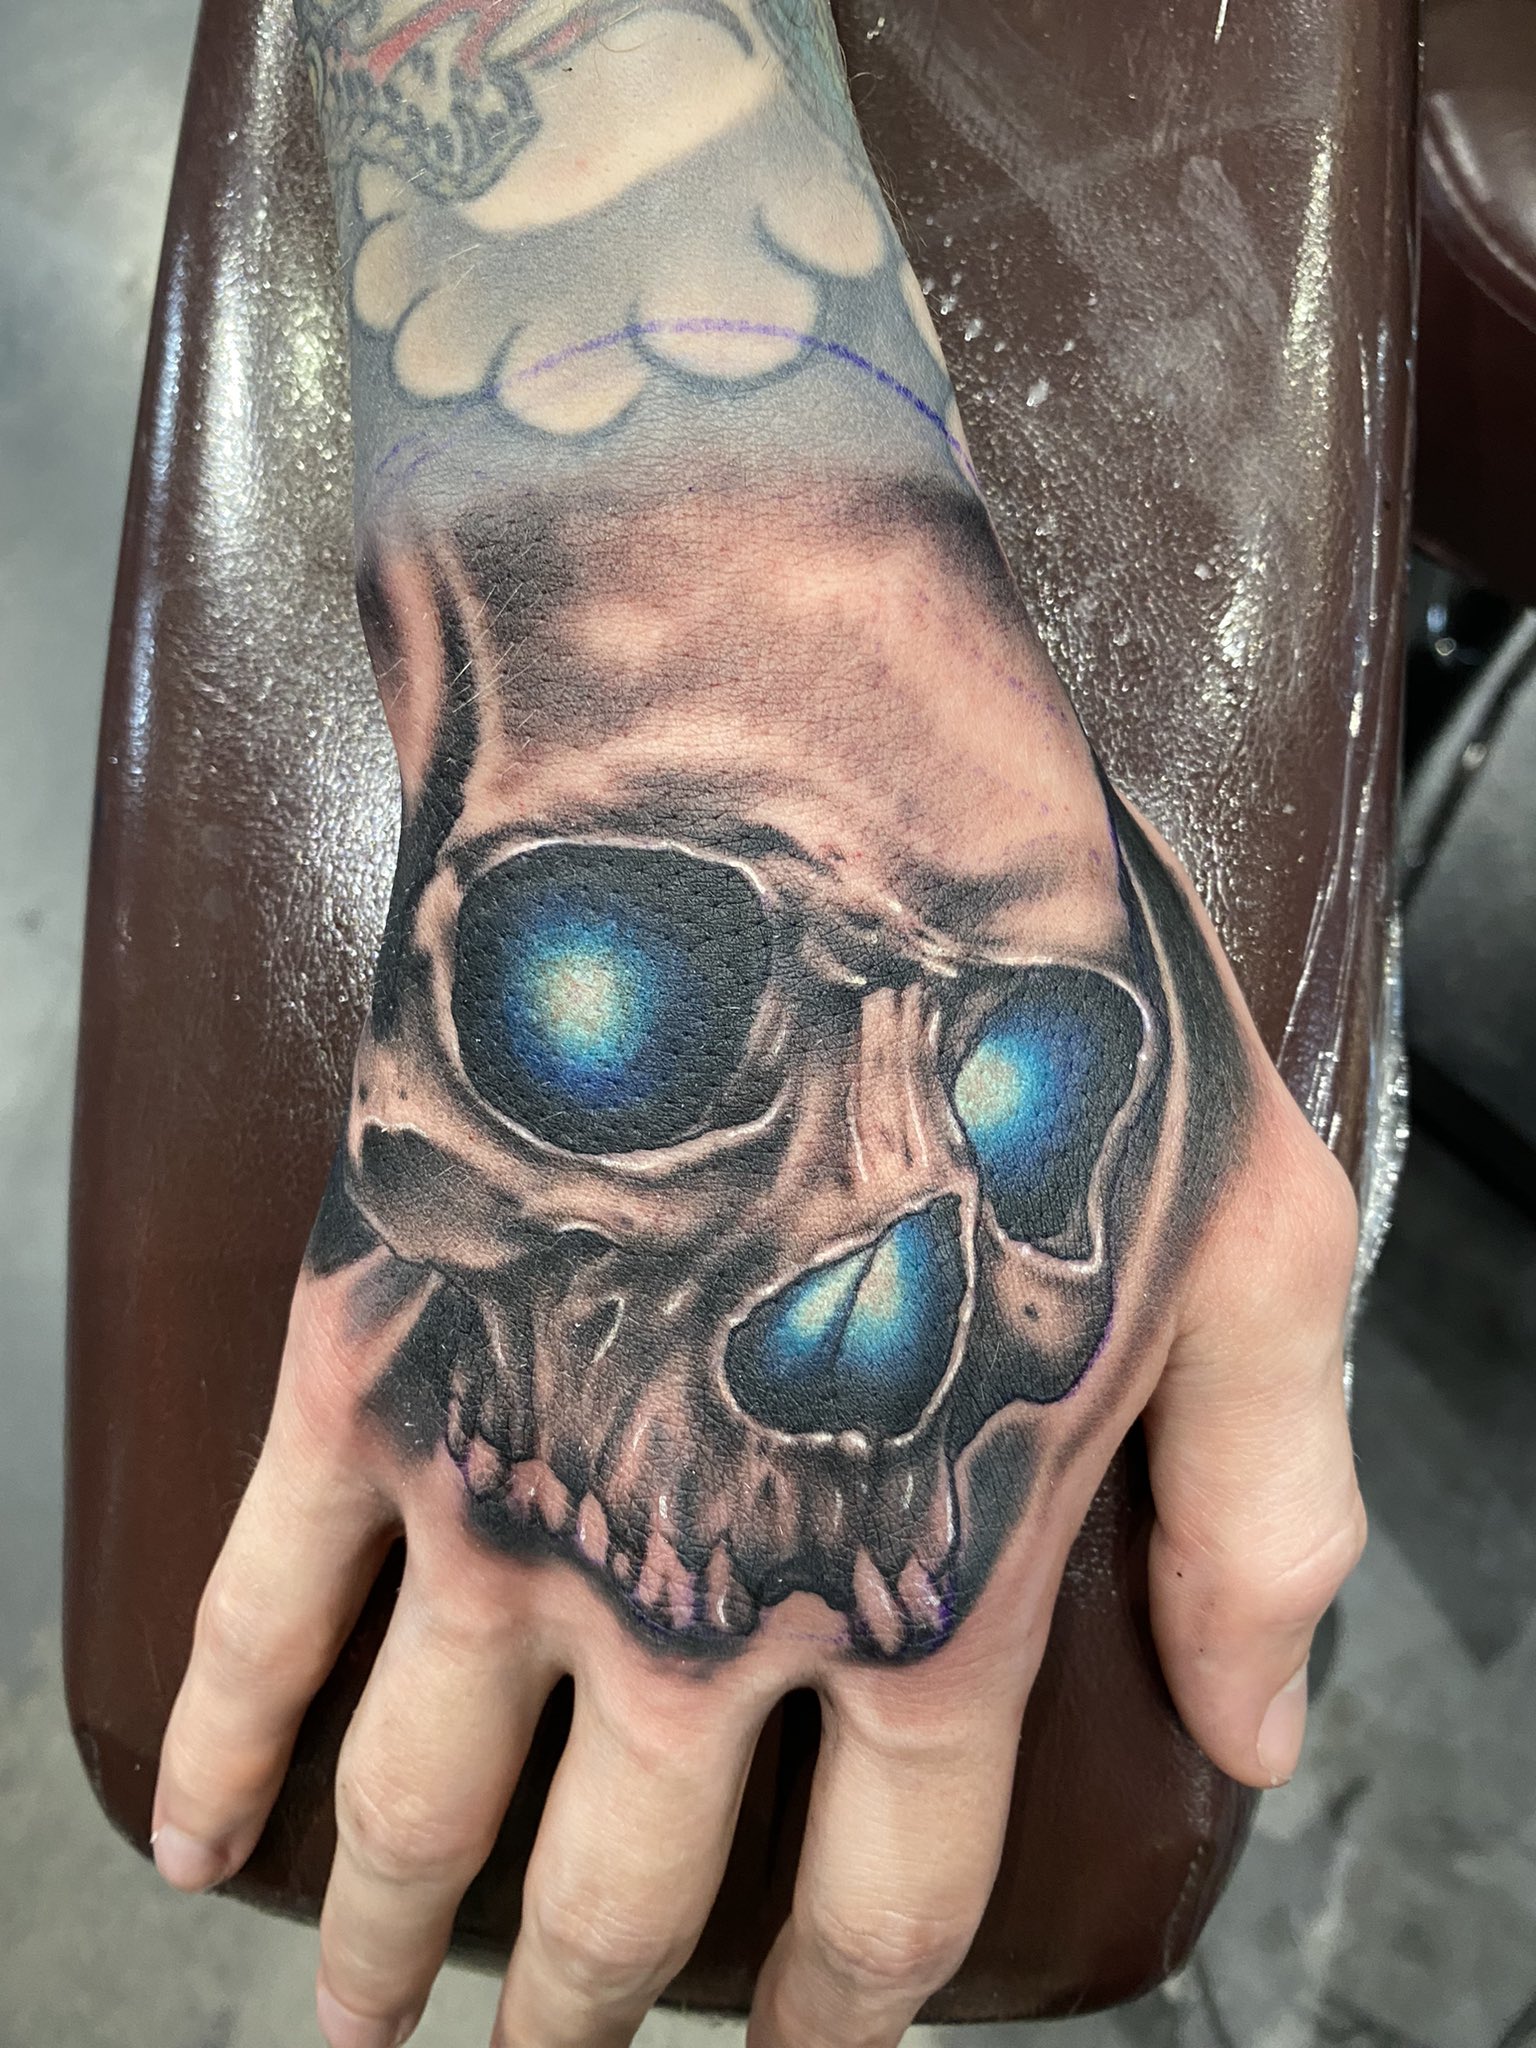 Fresh skull hand tattoo by Chris Bragg at Art Bomb tattoos in Massillon, OH  : r/tattoos